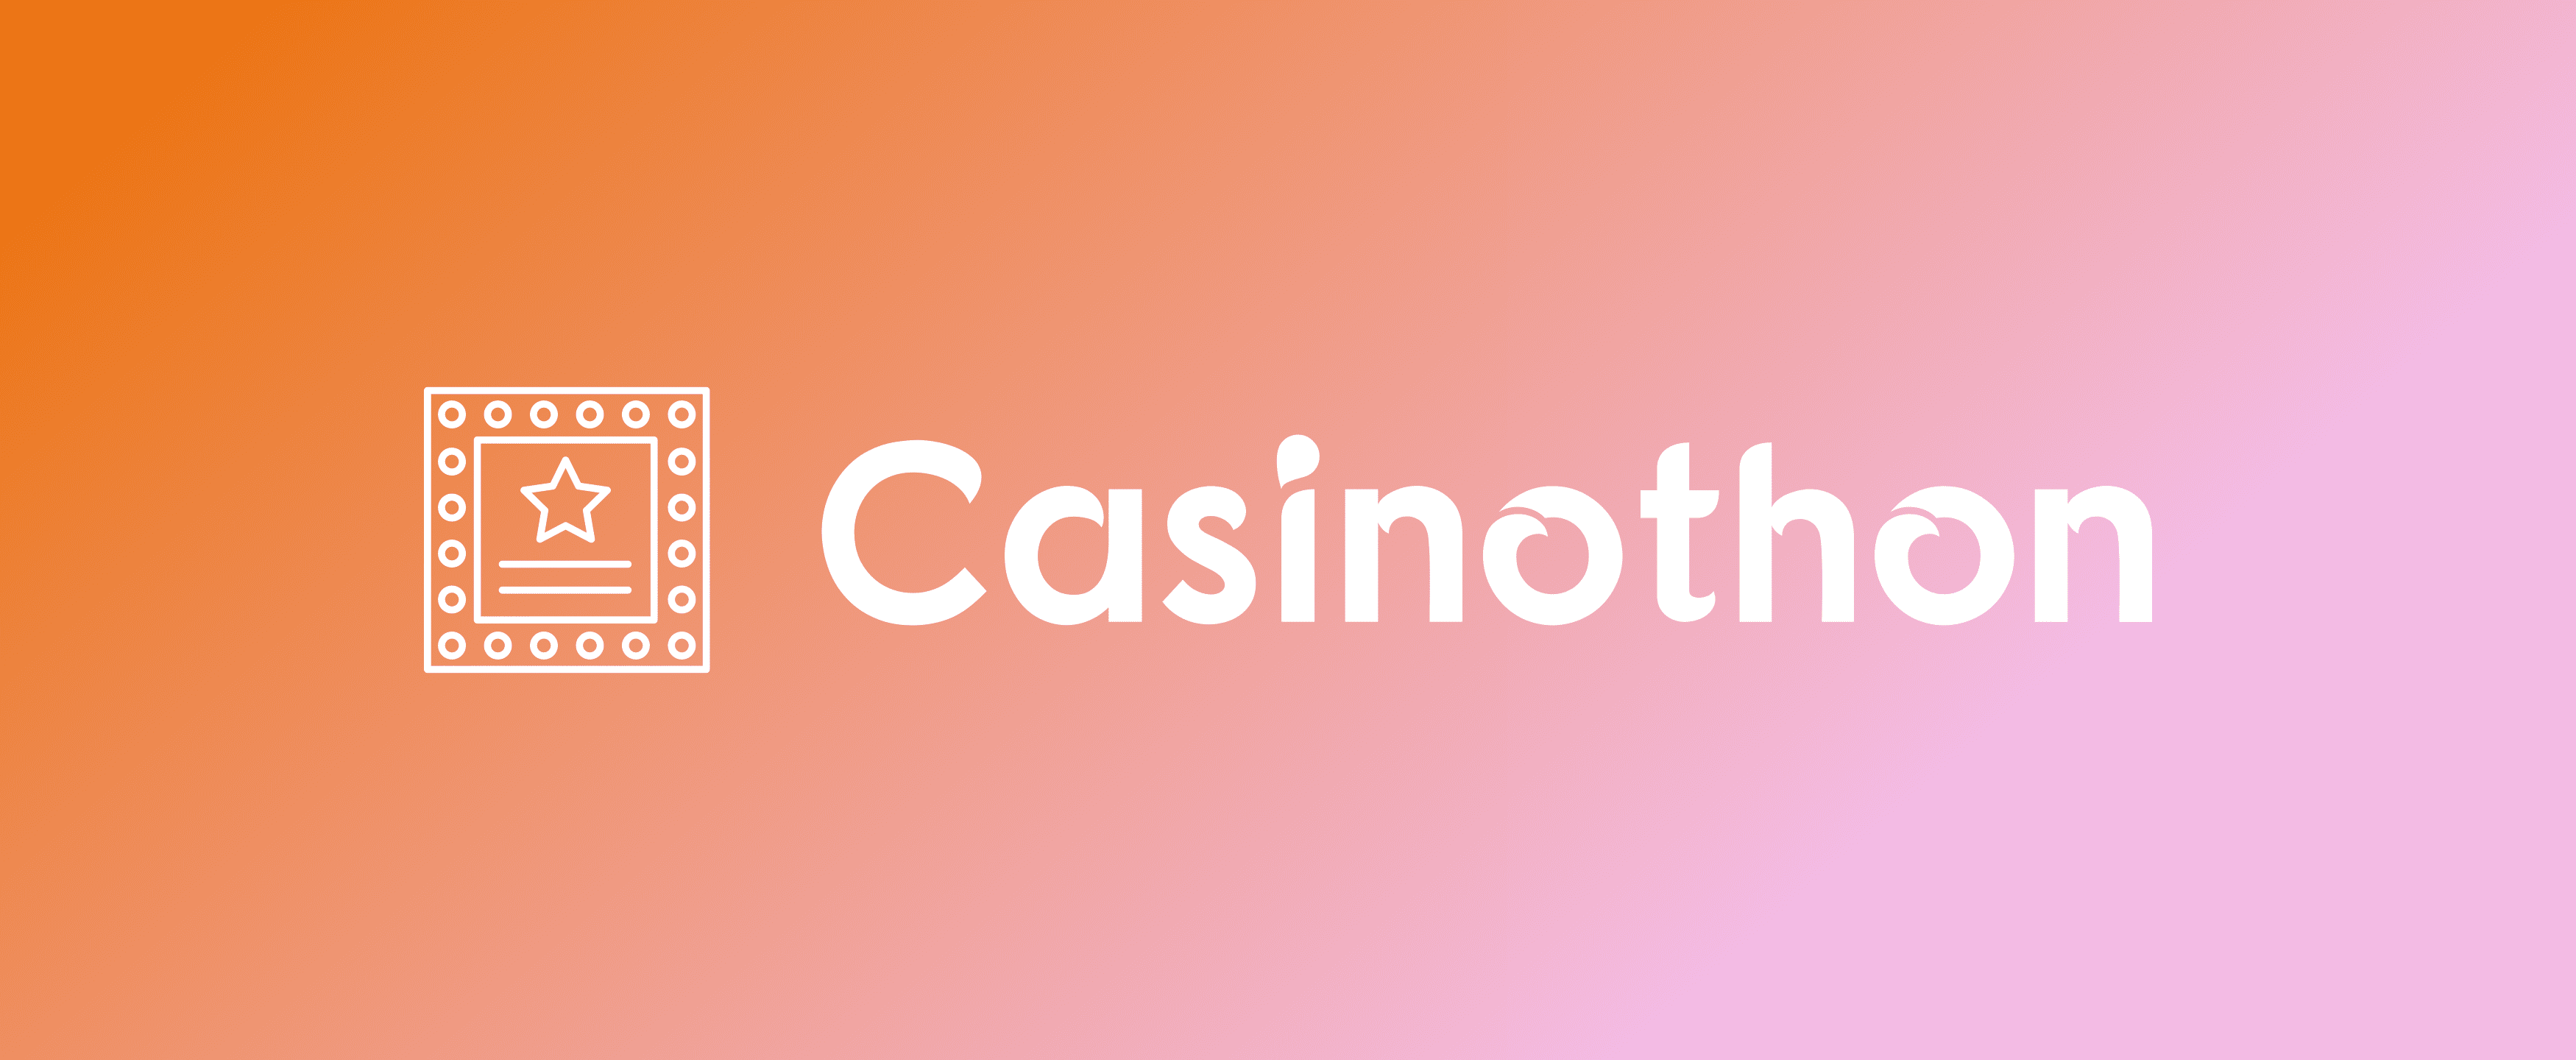 Casinothon Example Branding Photo